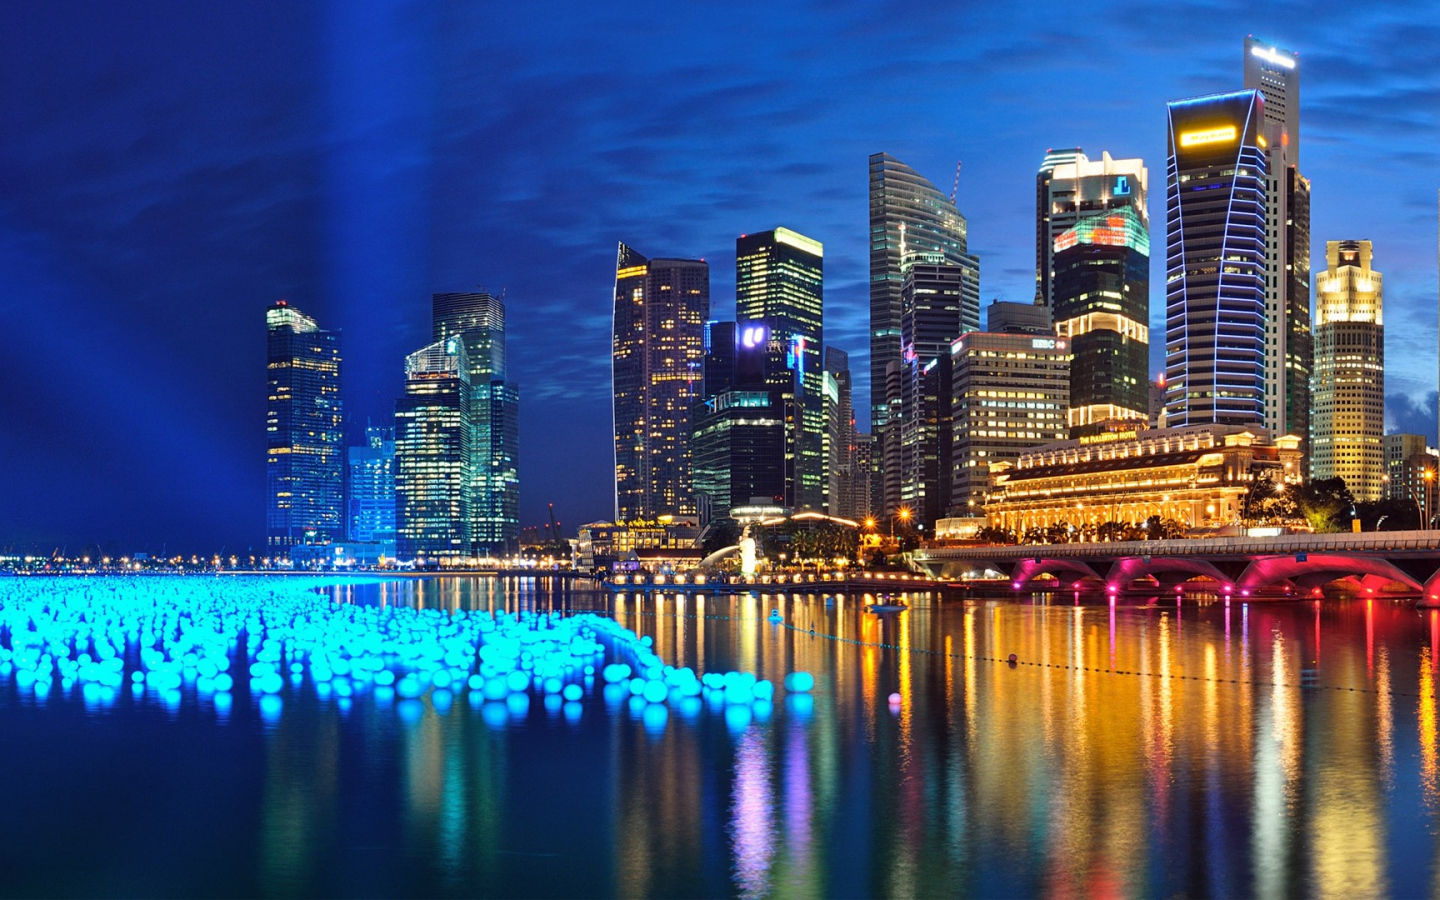 Night view of Marina Bay in Singapore